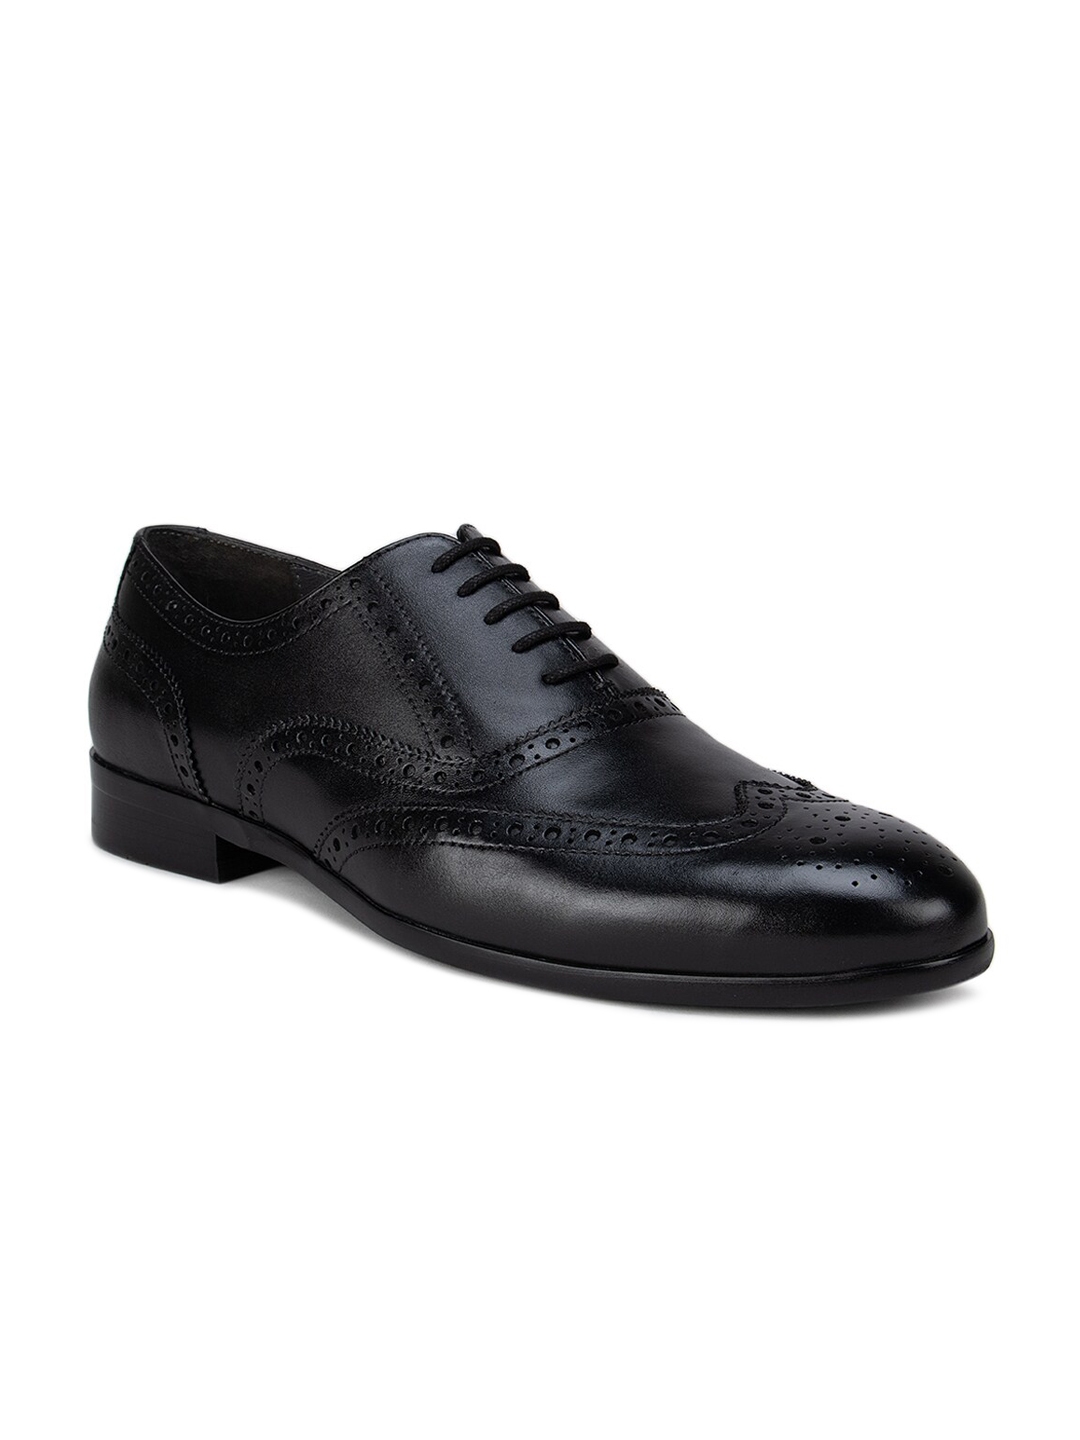 Buy ROSSO BRUNELLO Men Black Leather Brogues - Formal Shoes for Men ...